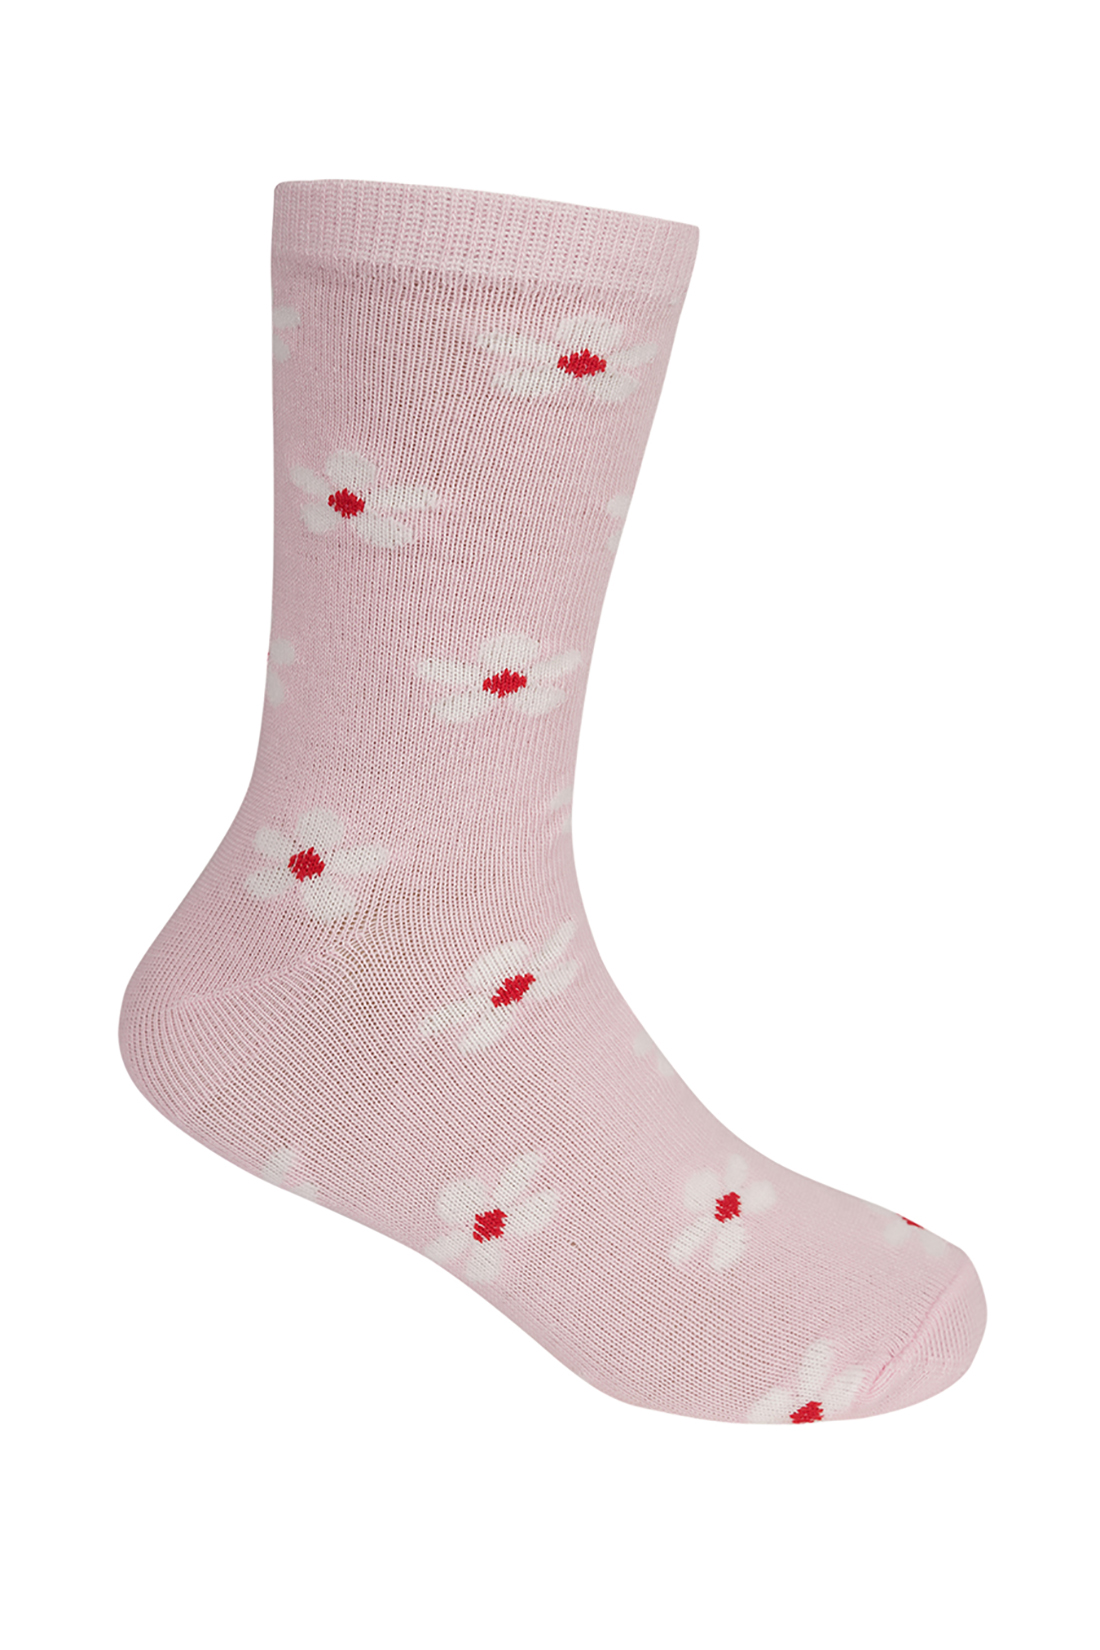 Носки для девочки (арт. baon BK390008), размер 29/31, цвет розовый